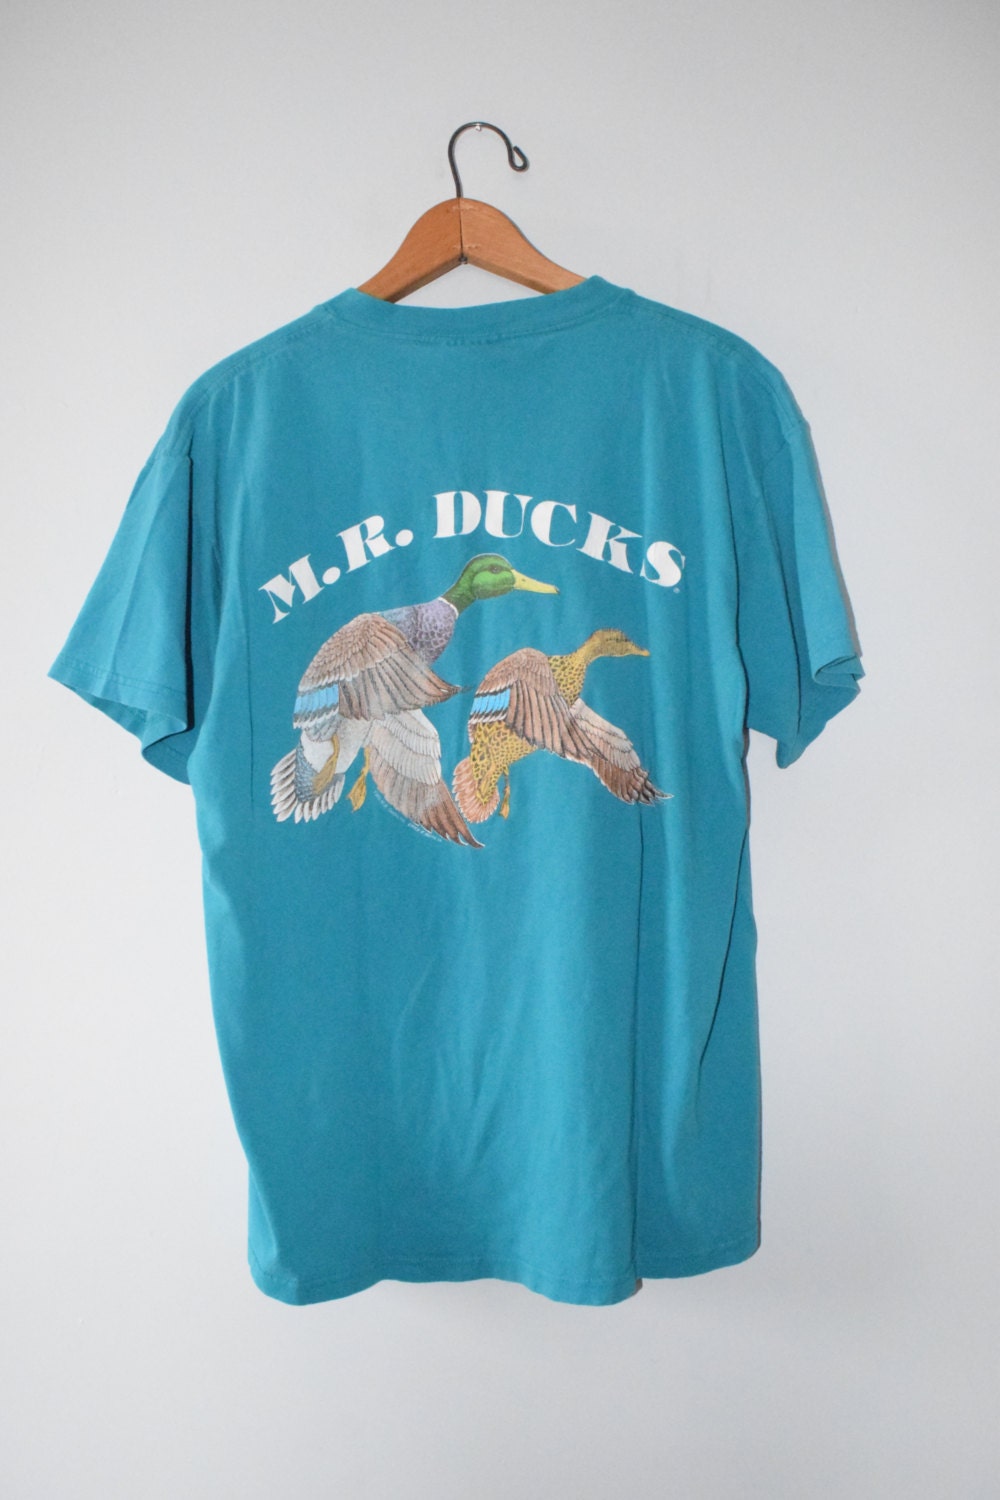 M.R. DUCKS '93 TEE // size large // 90s // t-shirt by GUTTERSHOP